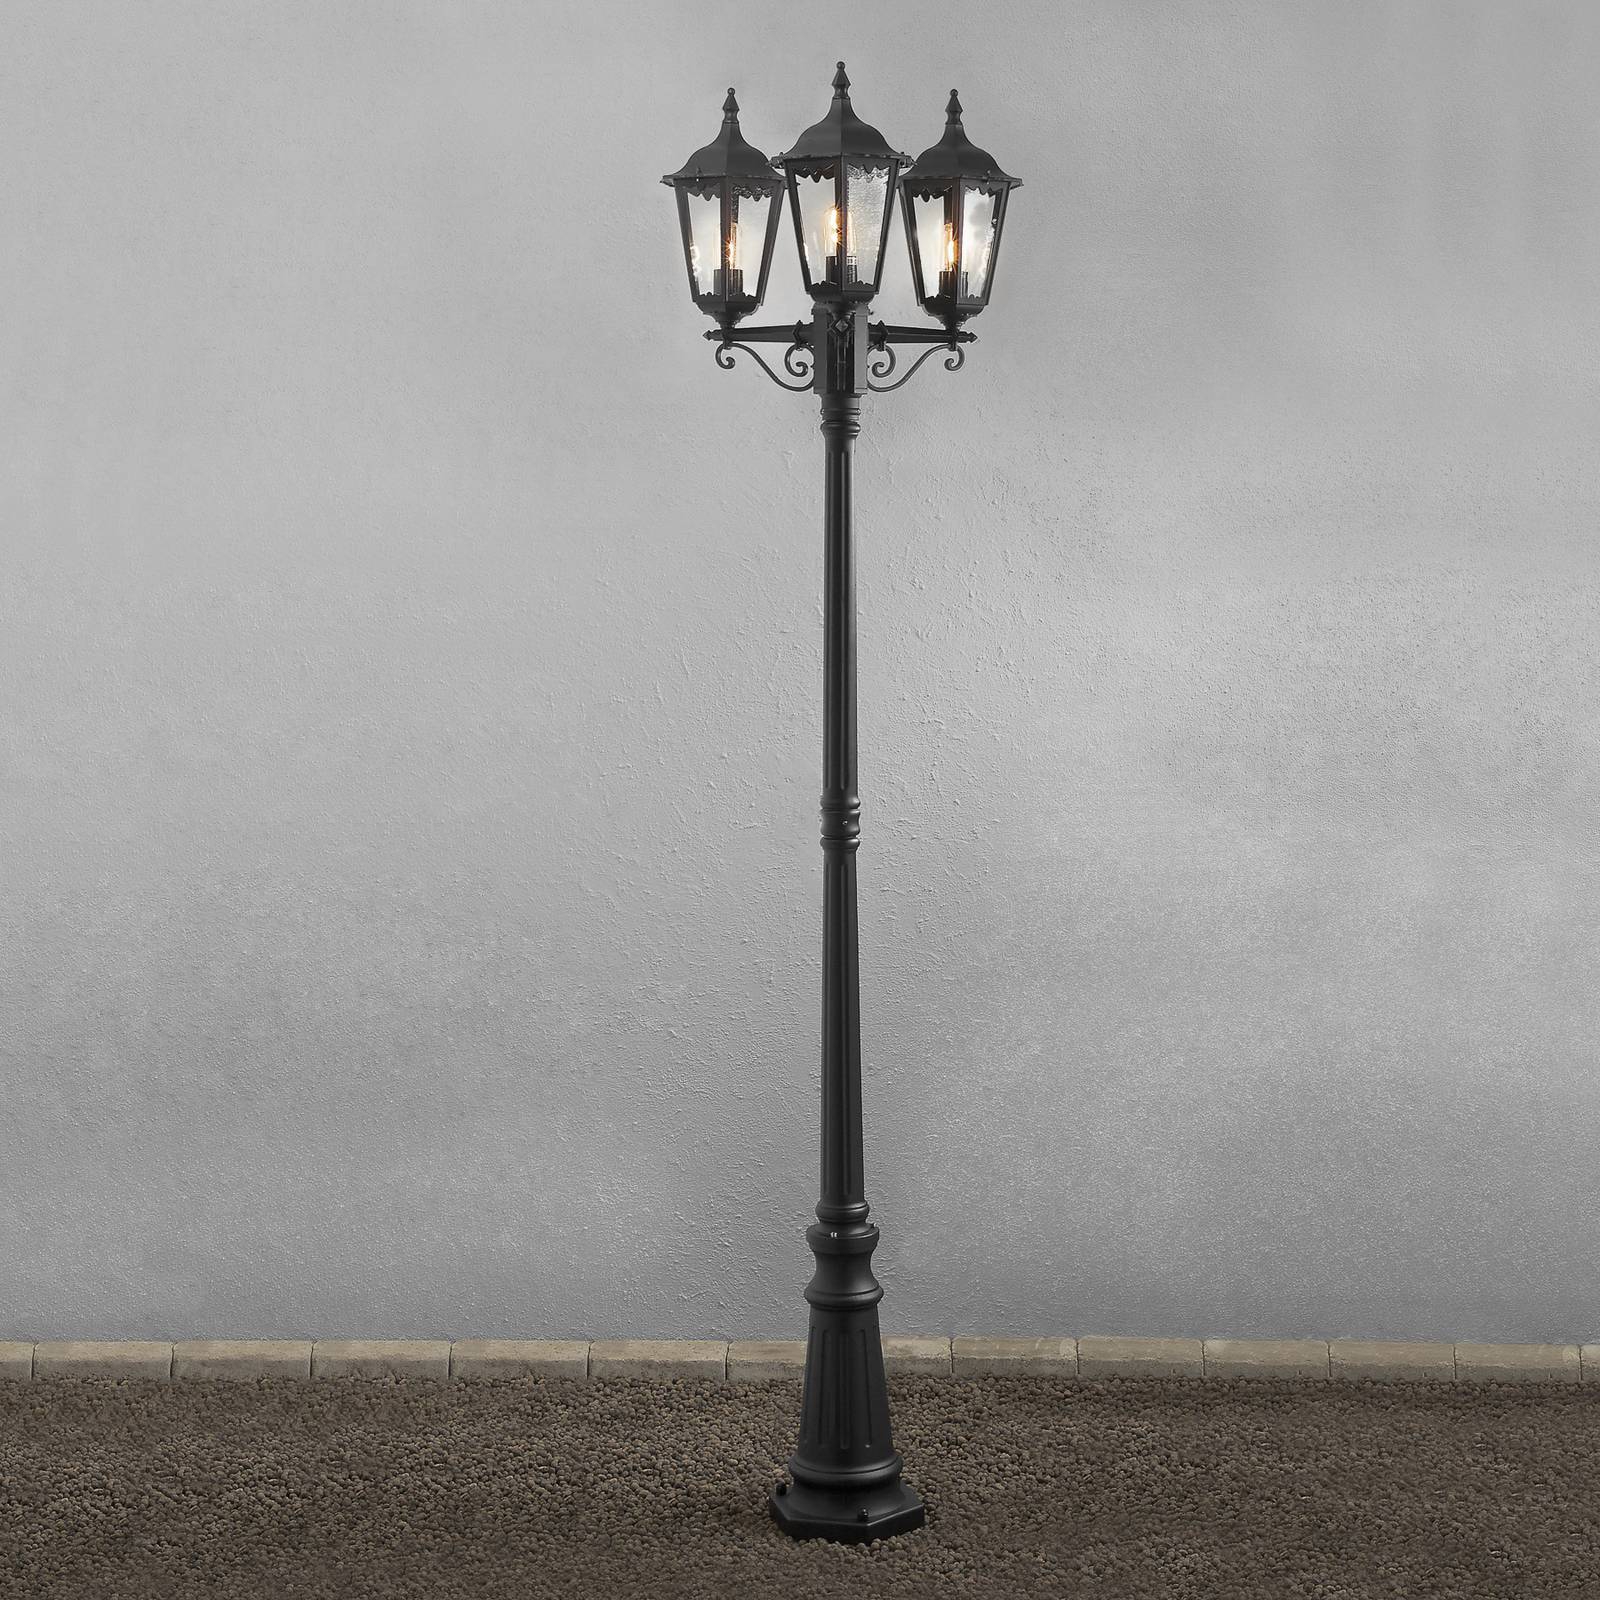 Image of Konstsmide Lampe pour mât Firenze à 3 lampe, noire 7318307217759